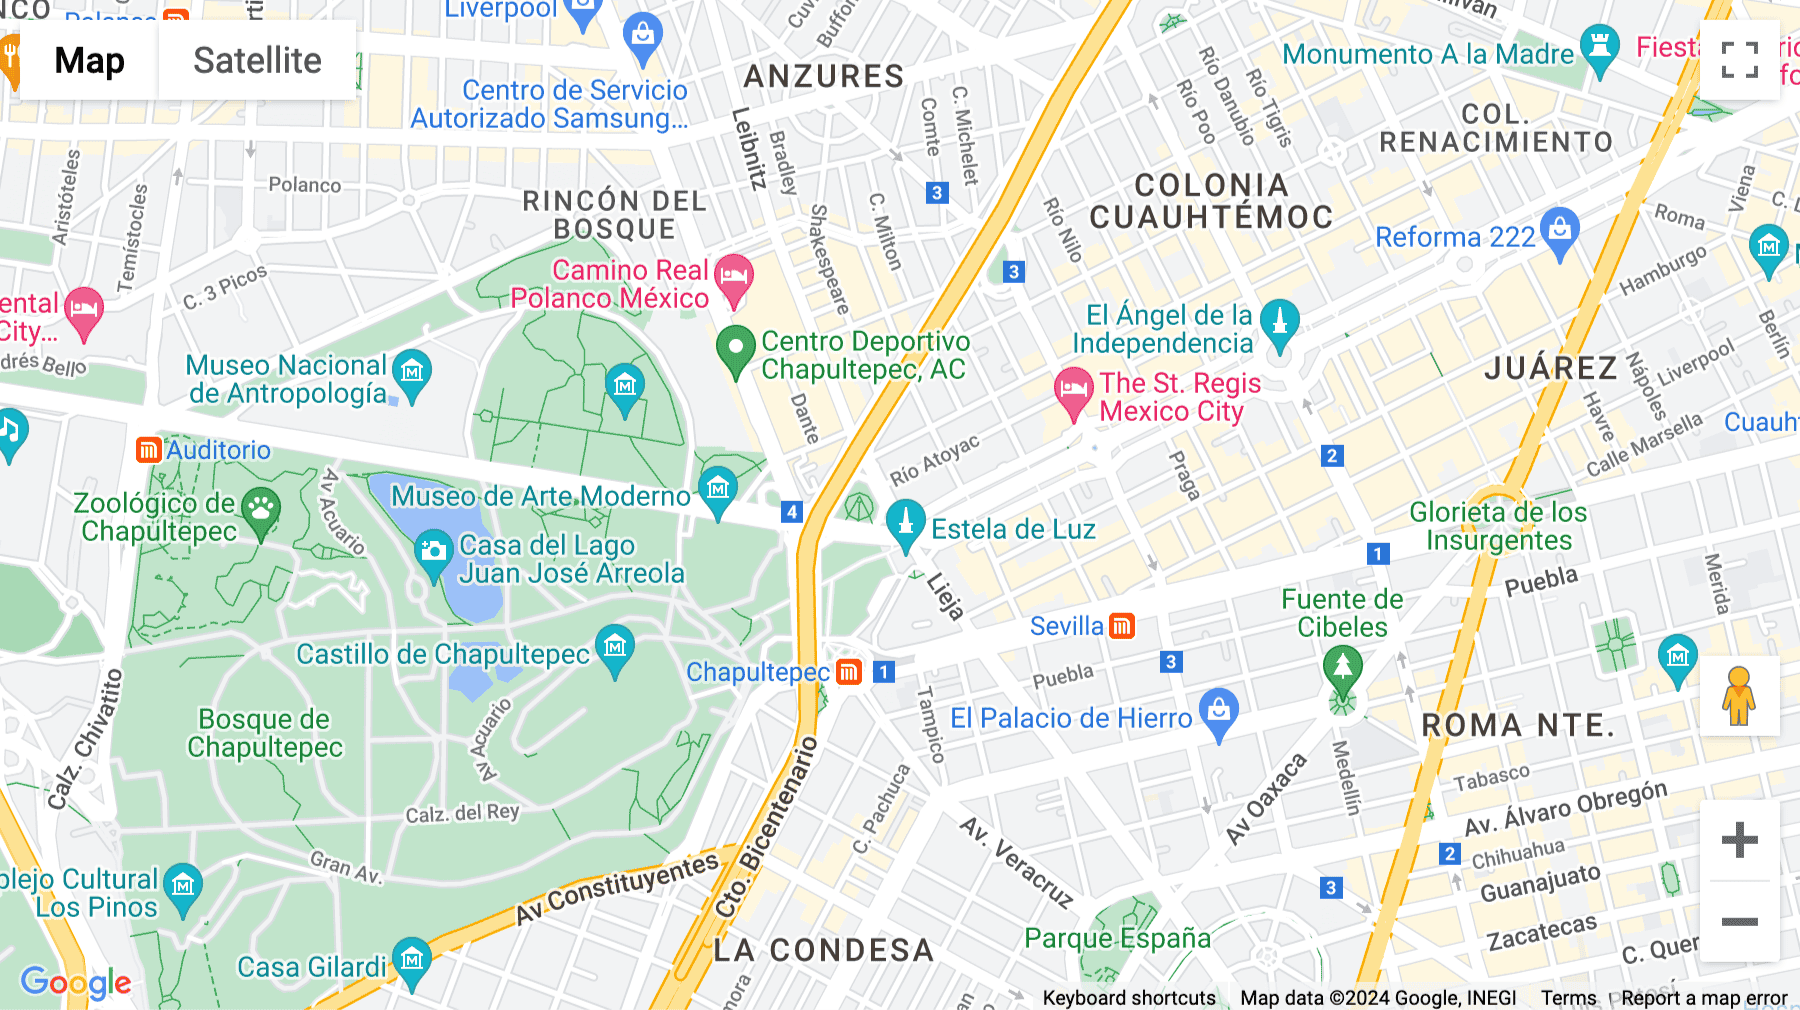 Click for interative map of Paseo de la Reforma 509, Cuauhtémoc, Mexico City